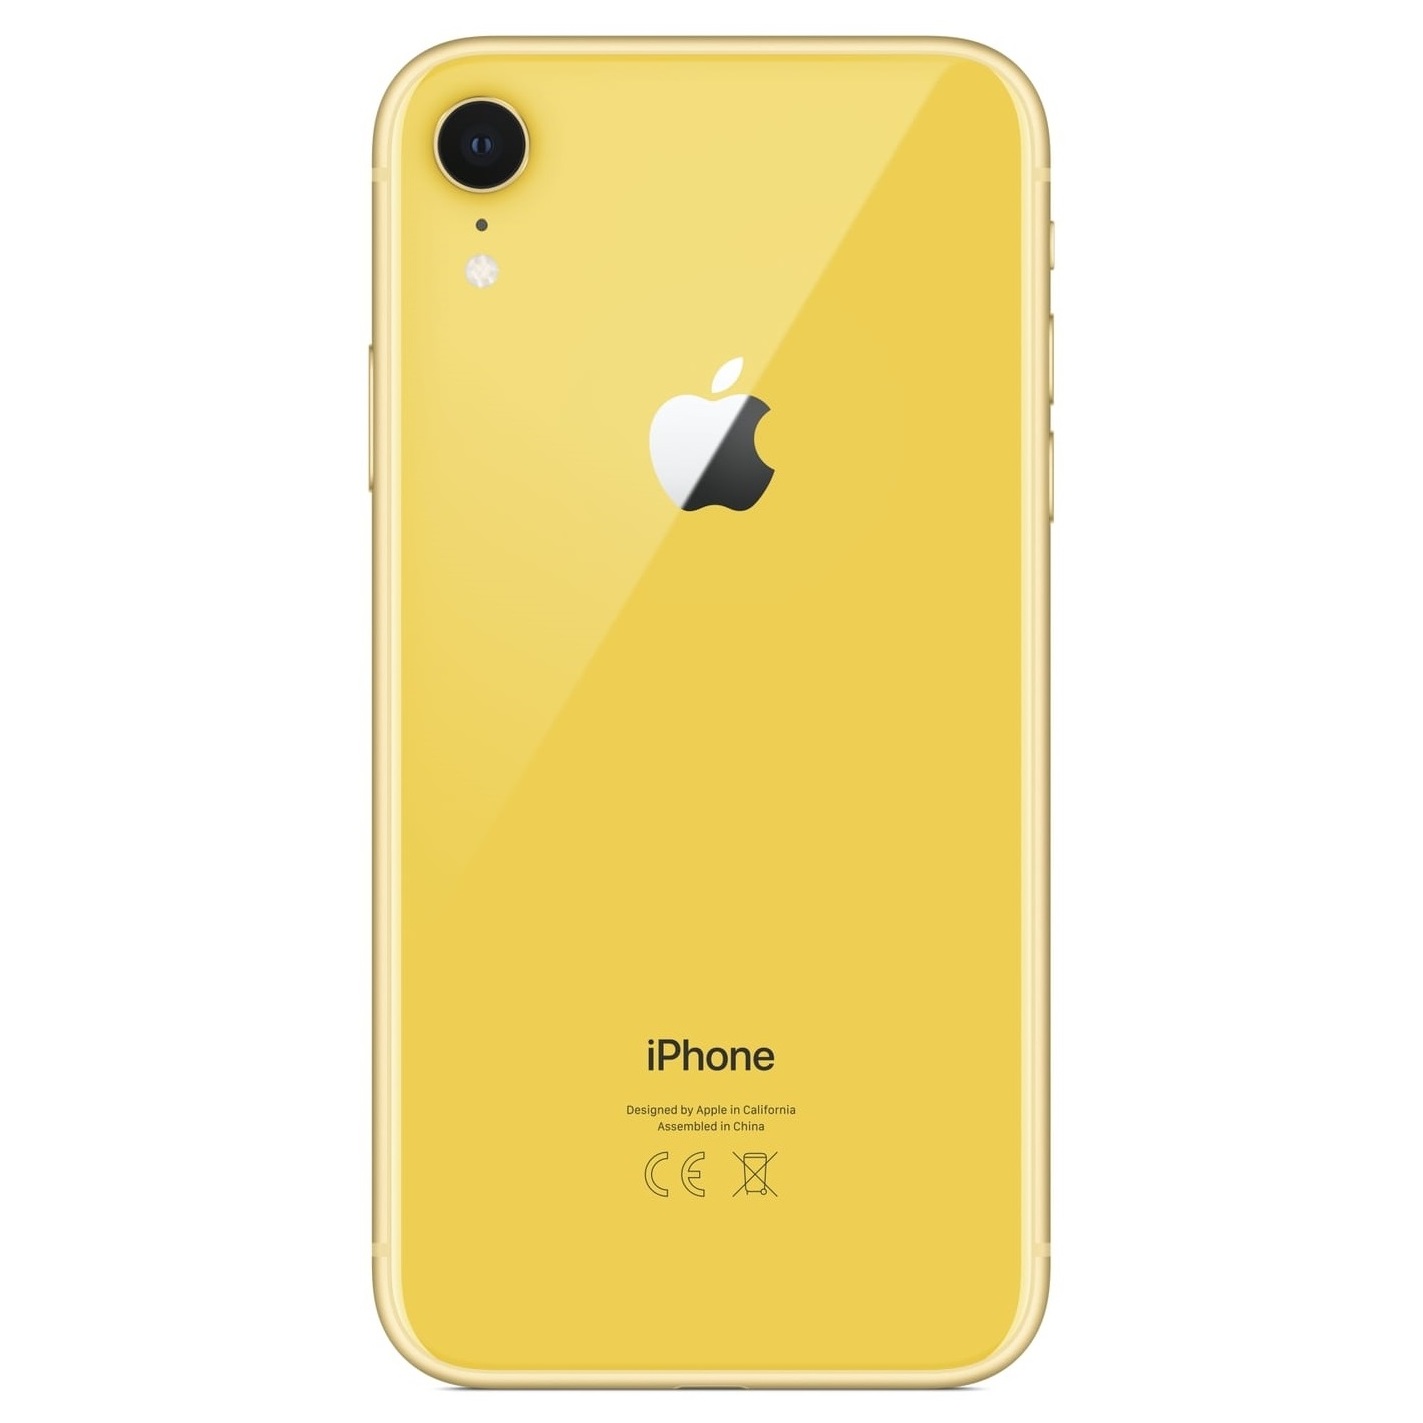 Apple iPhone XR 256GB Yellow